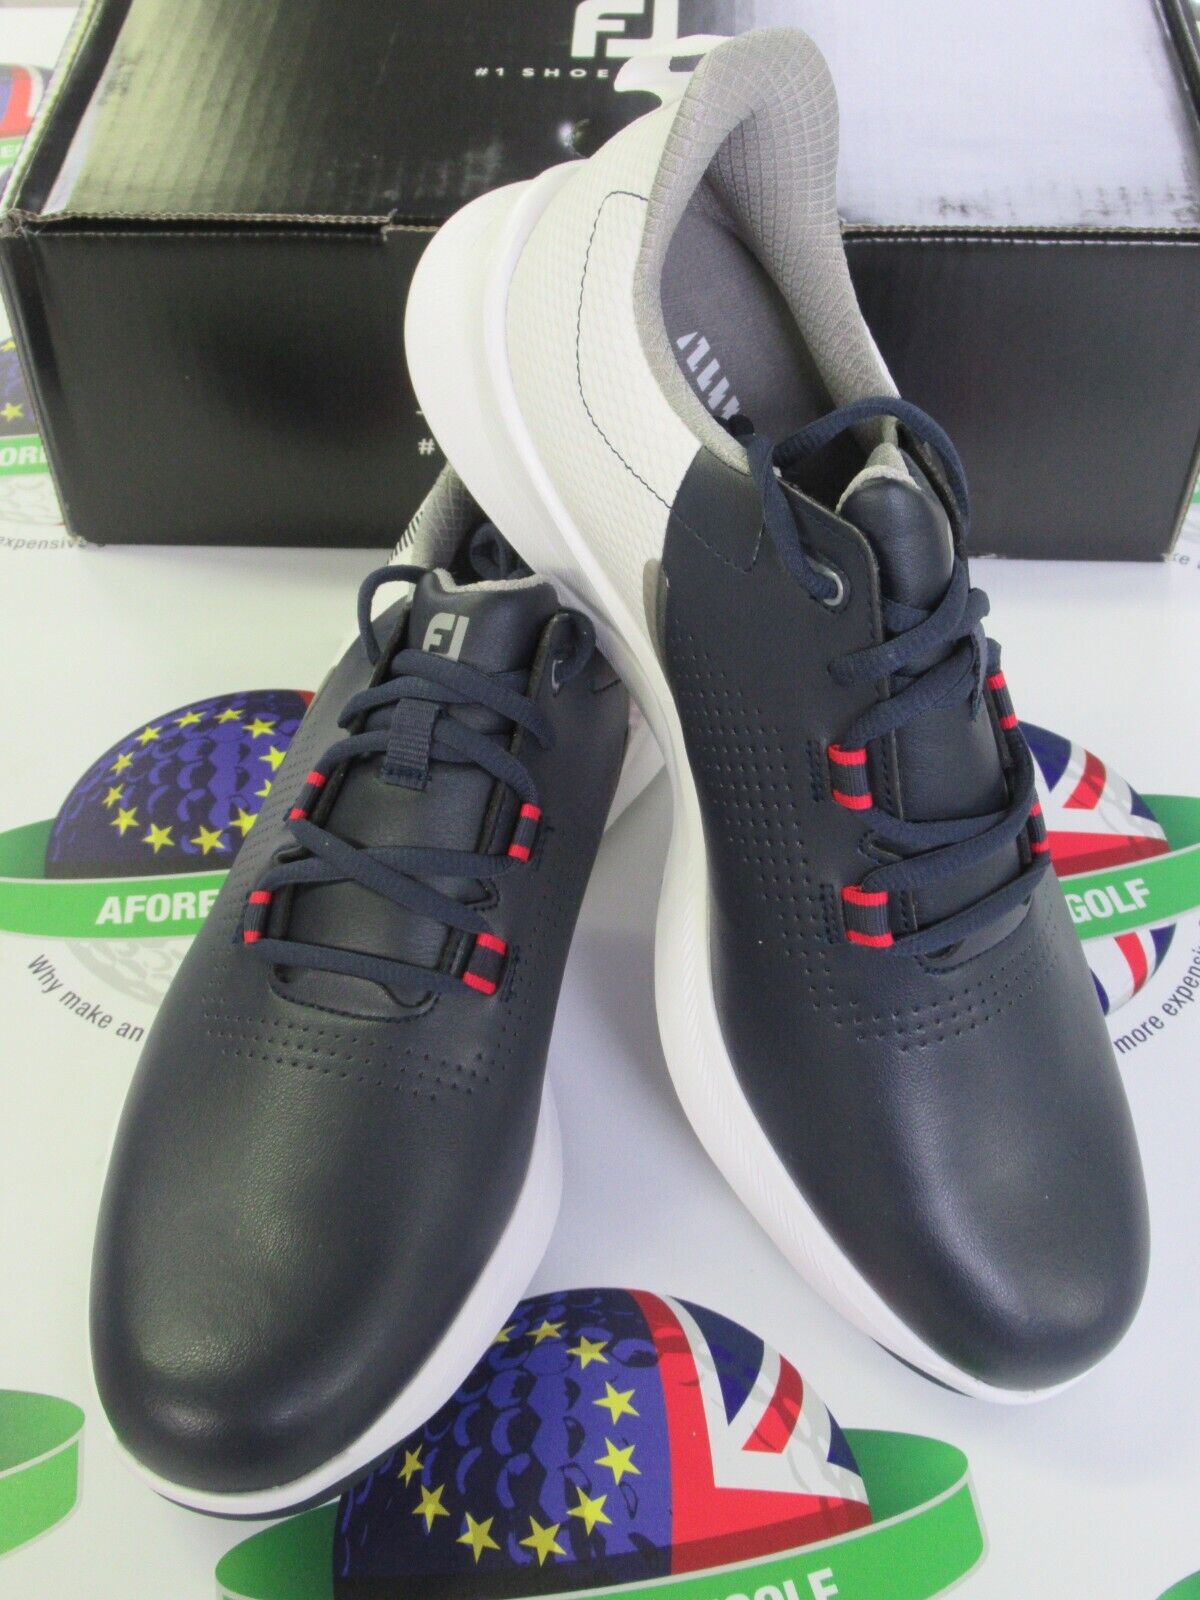 footjoy fj fuel waterproof golf shoes 55442k navy/white uk size 8.5 medium